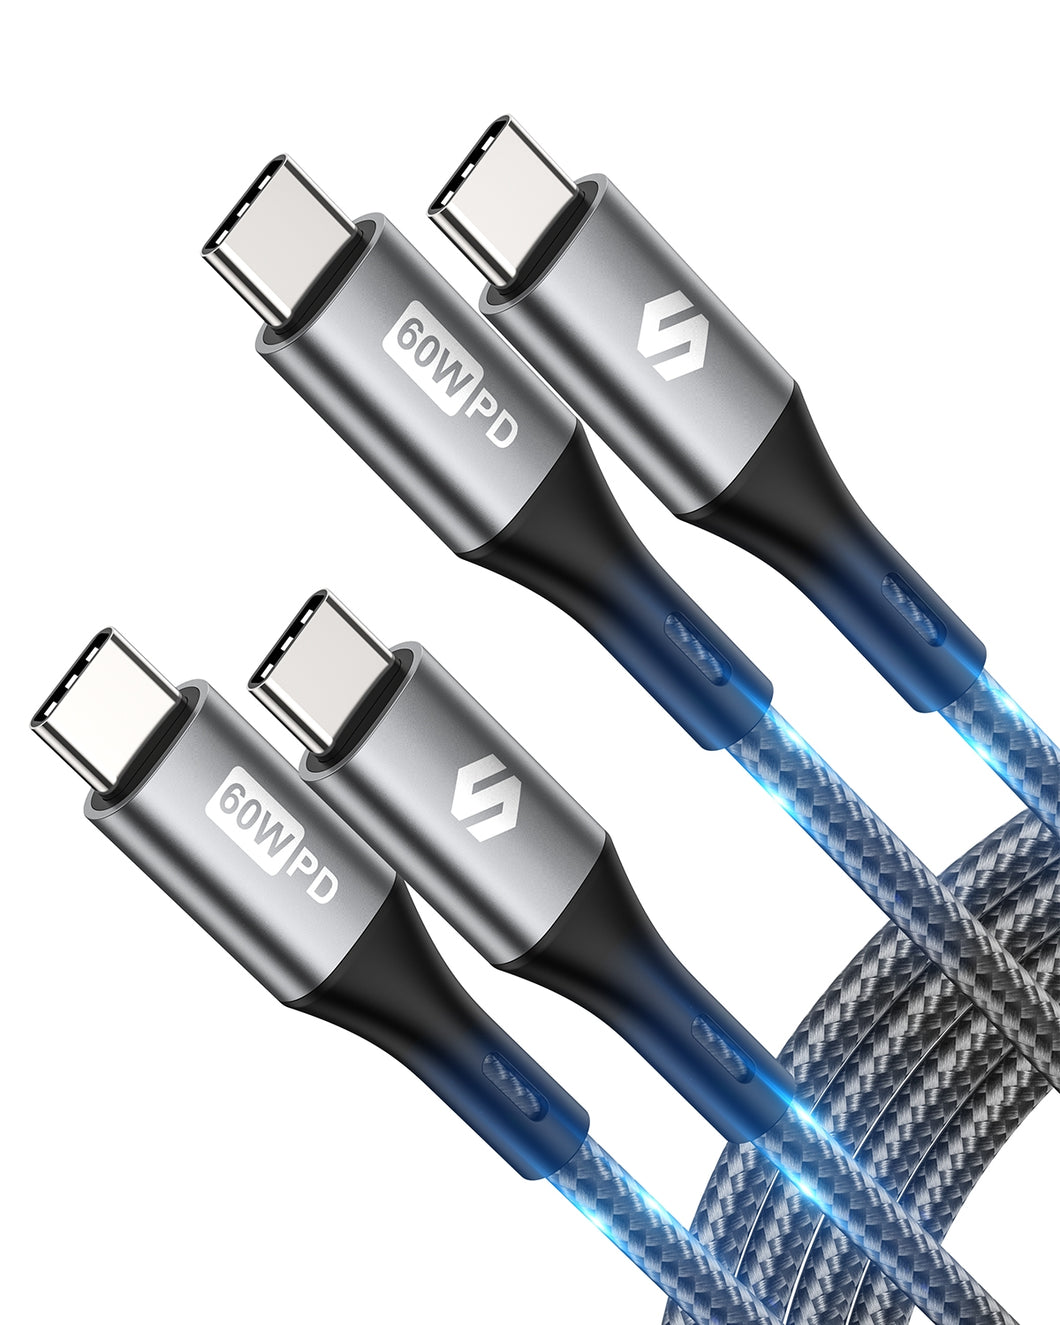 Silkland USB C to USB C Cable 1M 2Pack, 60W/3A USB C Charger Cable Compatible for Galaxy S22, iPad Pro 2021, iPad Mini 6, iPad Air 4, MacBook Pro